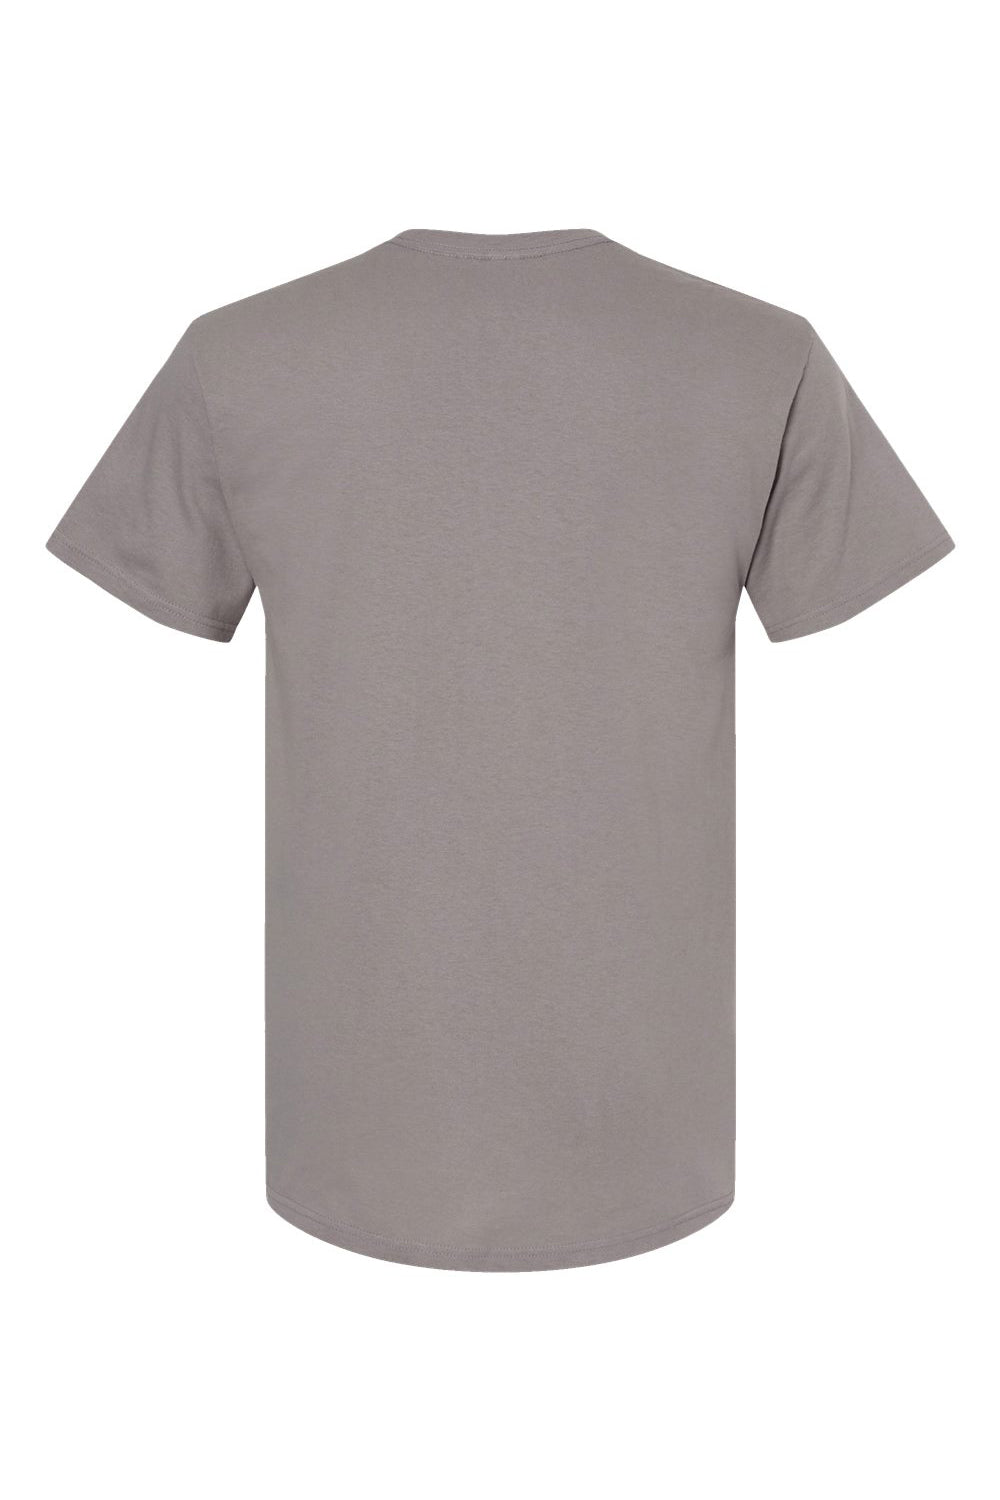 M&O 4800 Mens Gold Soft Touch Short Sleeve Crewneck T-Shirt Gravel Grey Flat Back